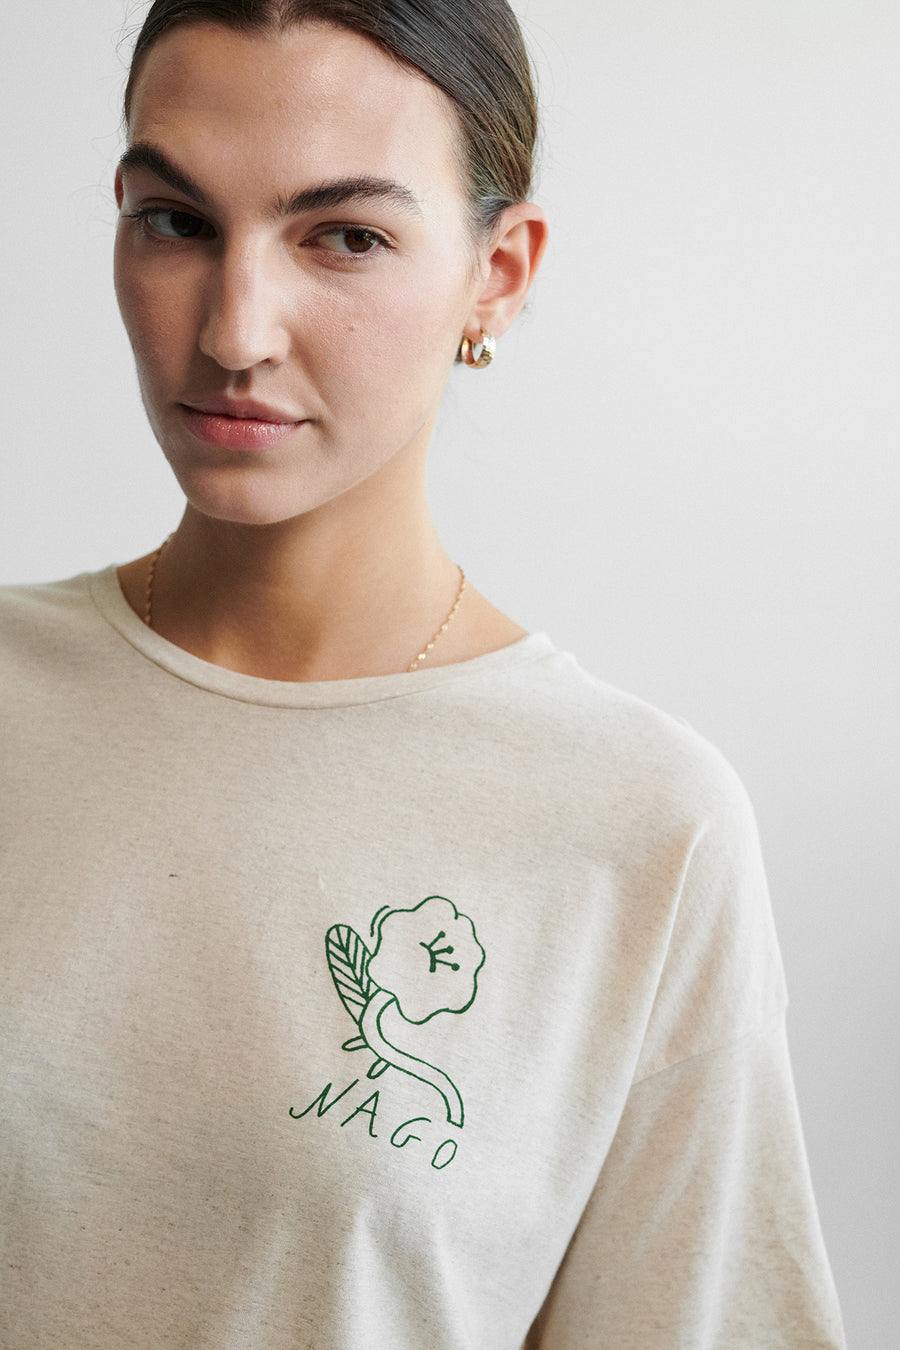 T-shirt in organic cotton & hemp blend / 13 / 02 / unbleached / small print